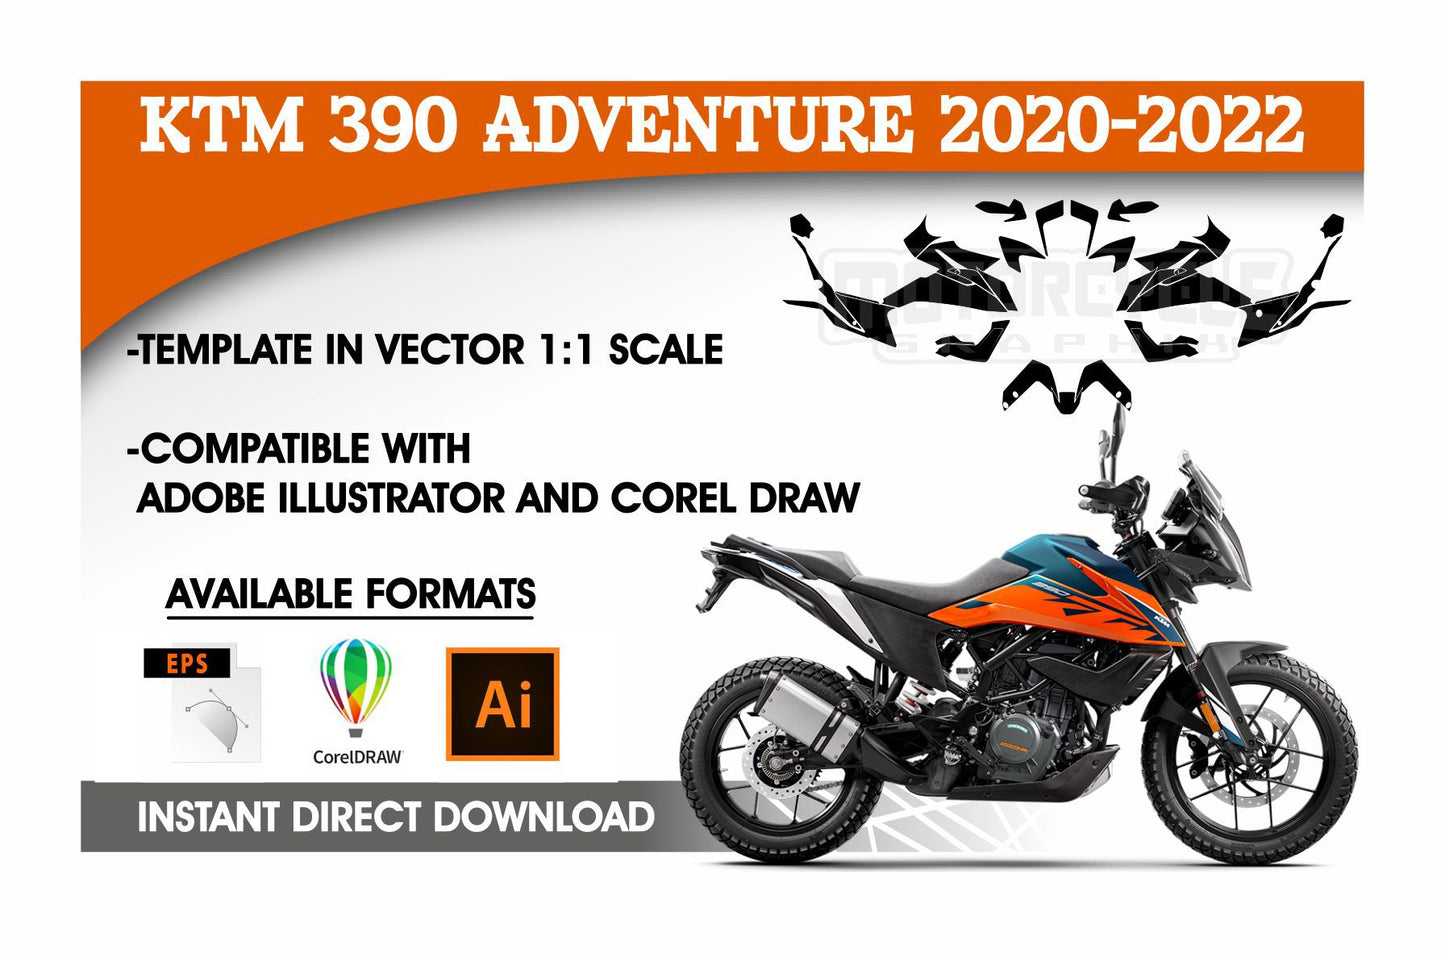 KTM 390 ADVENTURE 2020-2022